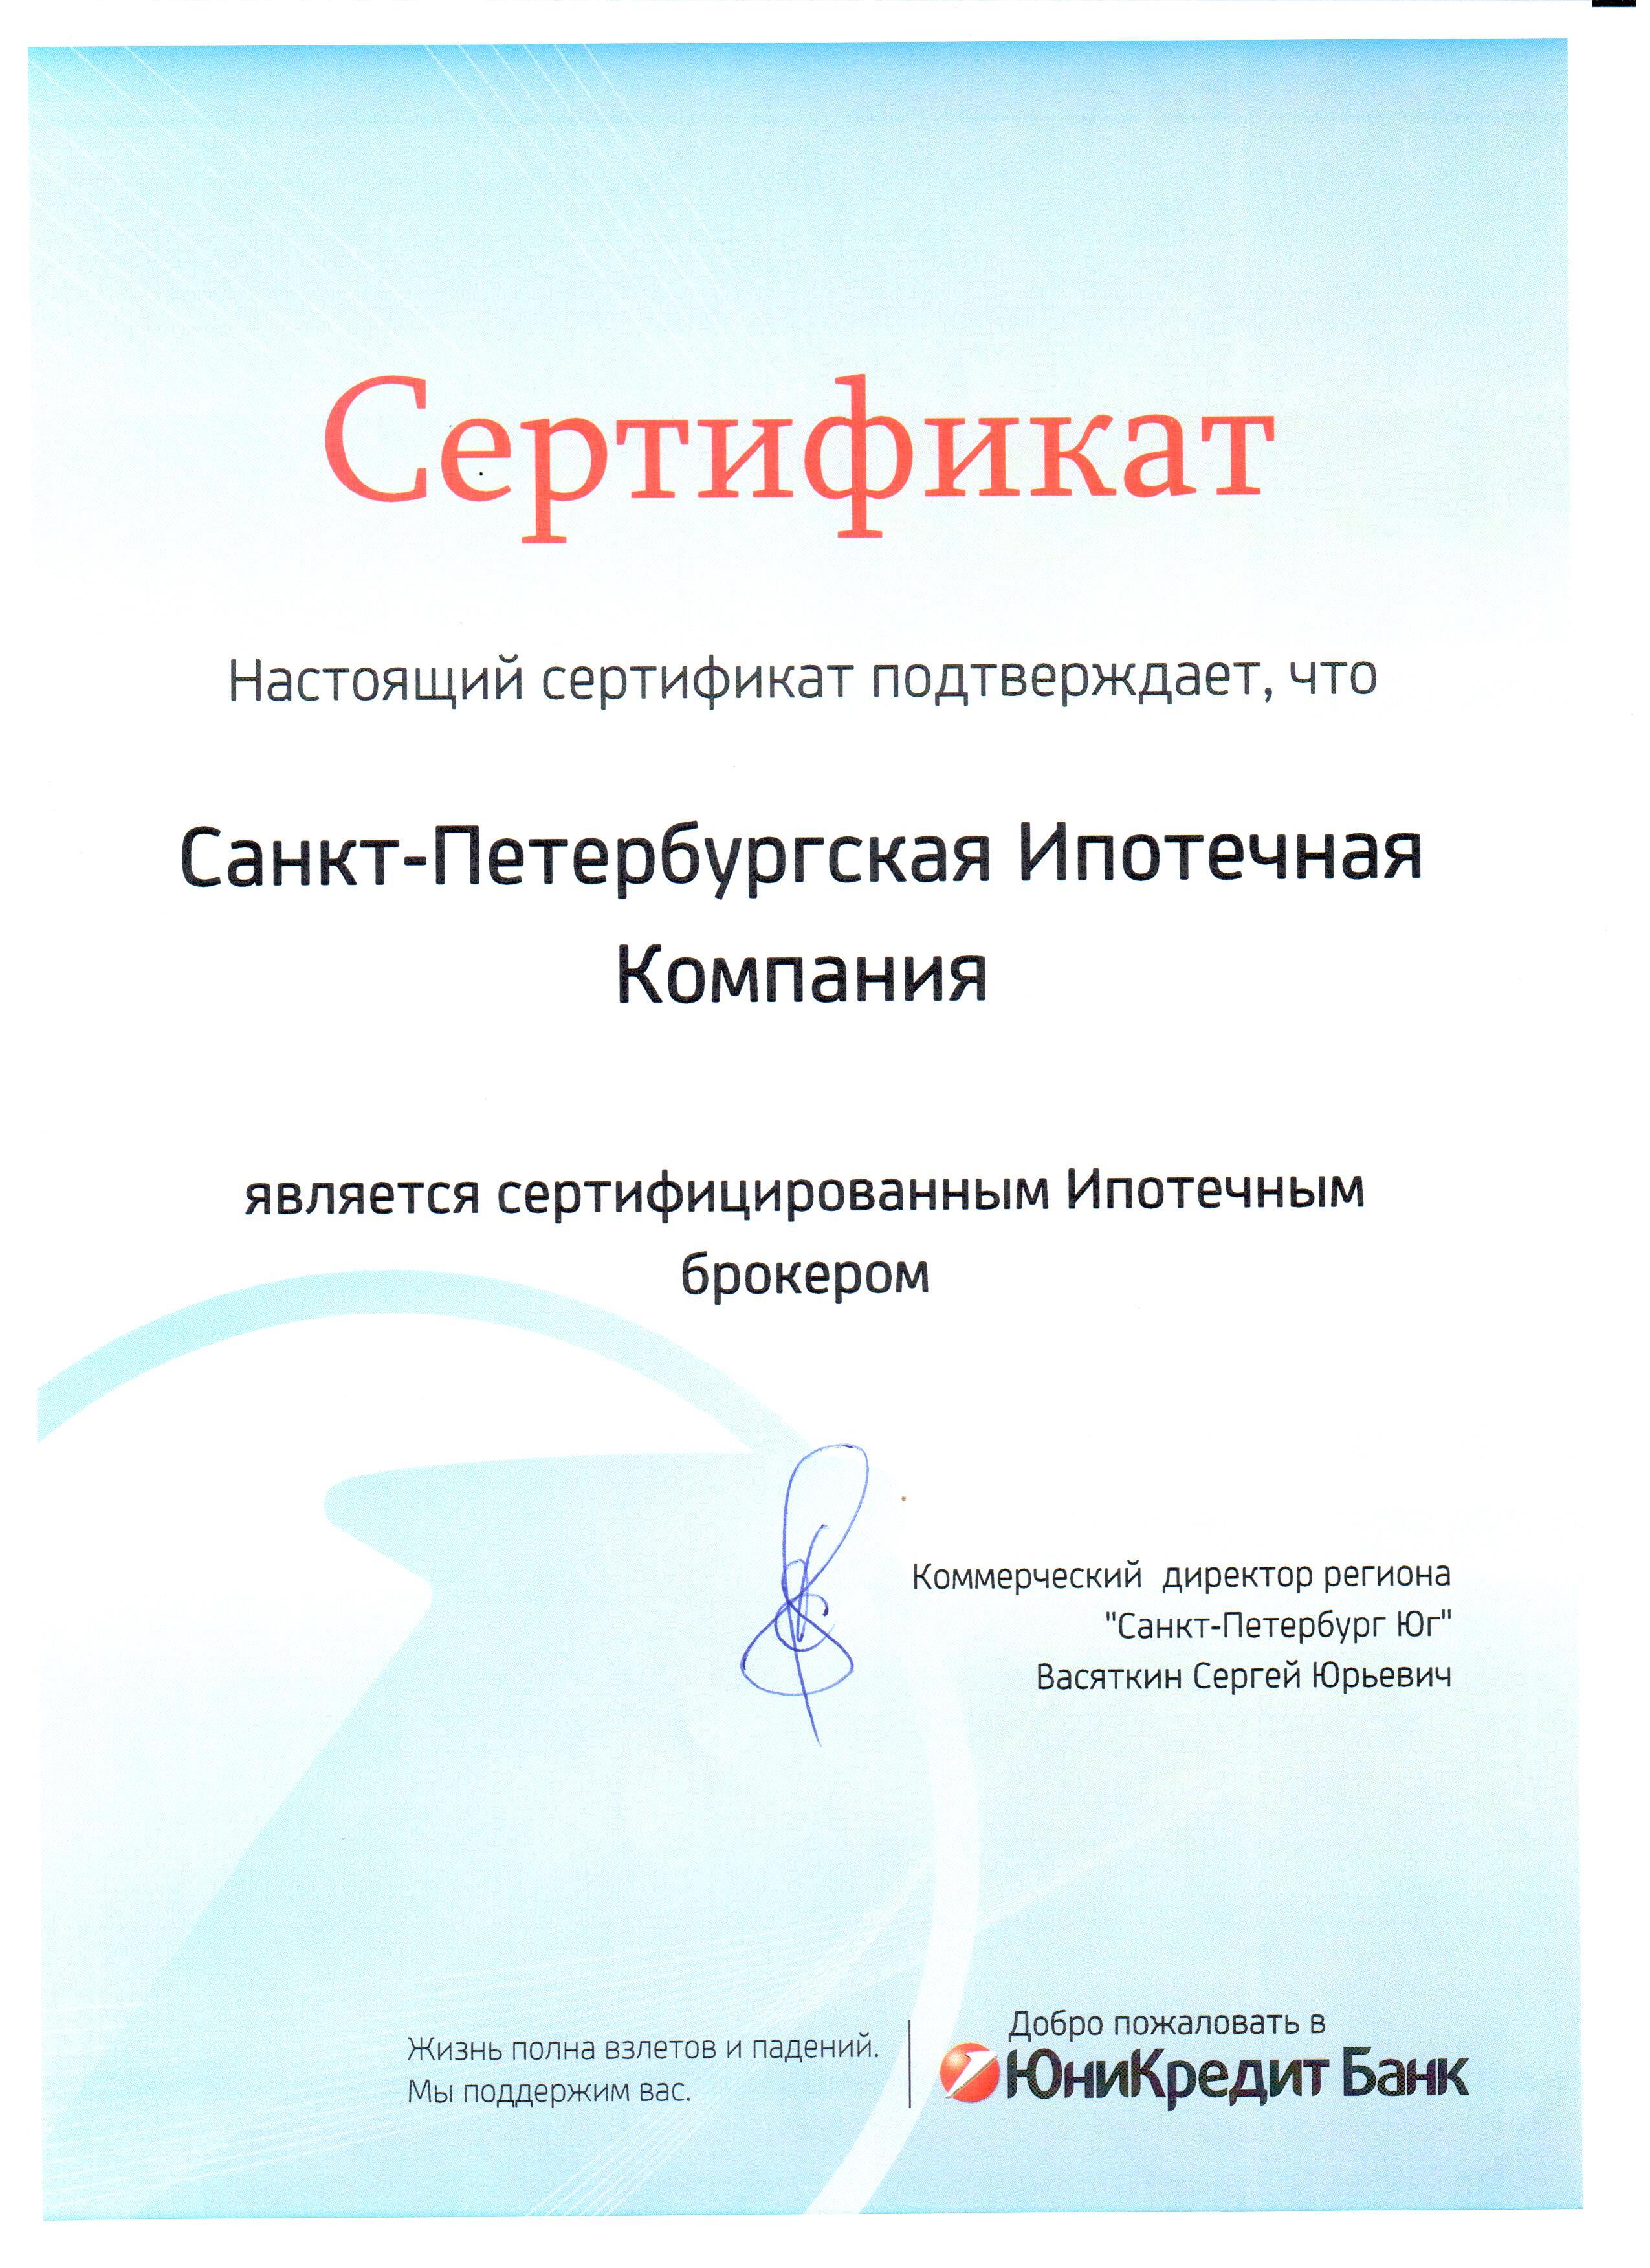 Сертификат ЮниКредит